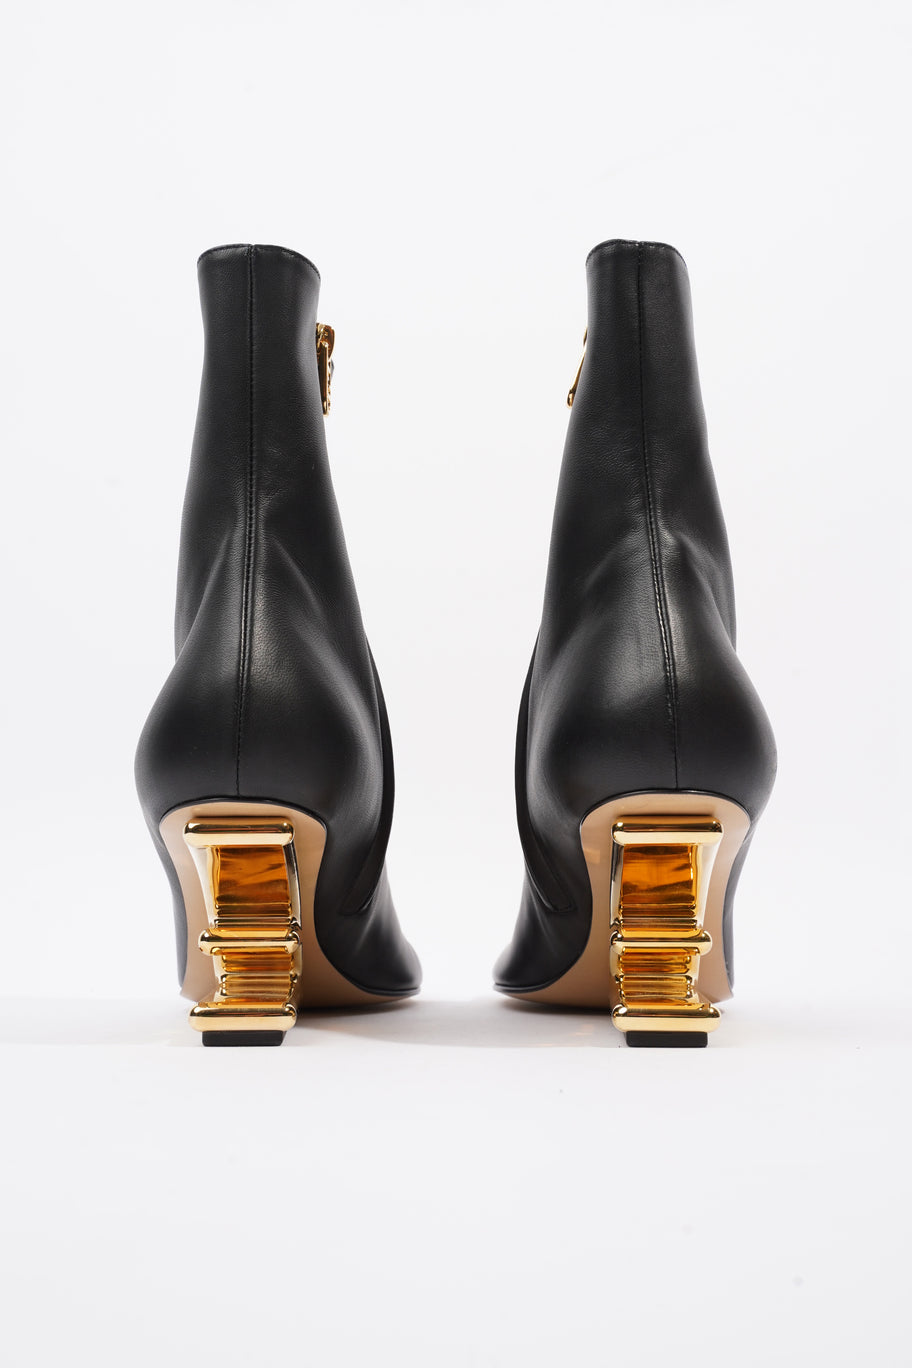 Fendi First Boots Black Leather EU 39 UK 6 Image 6